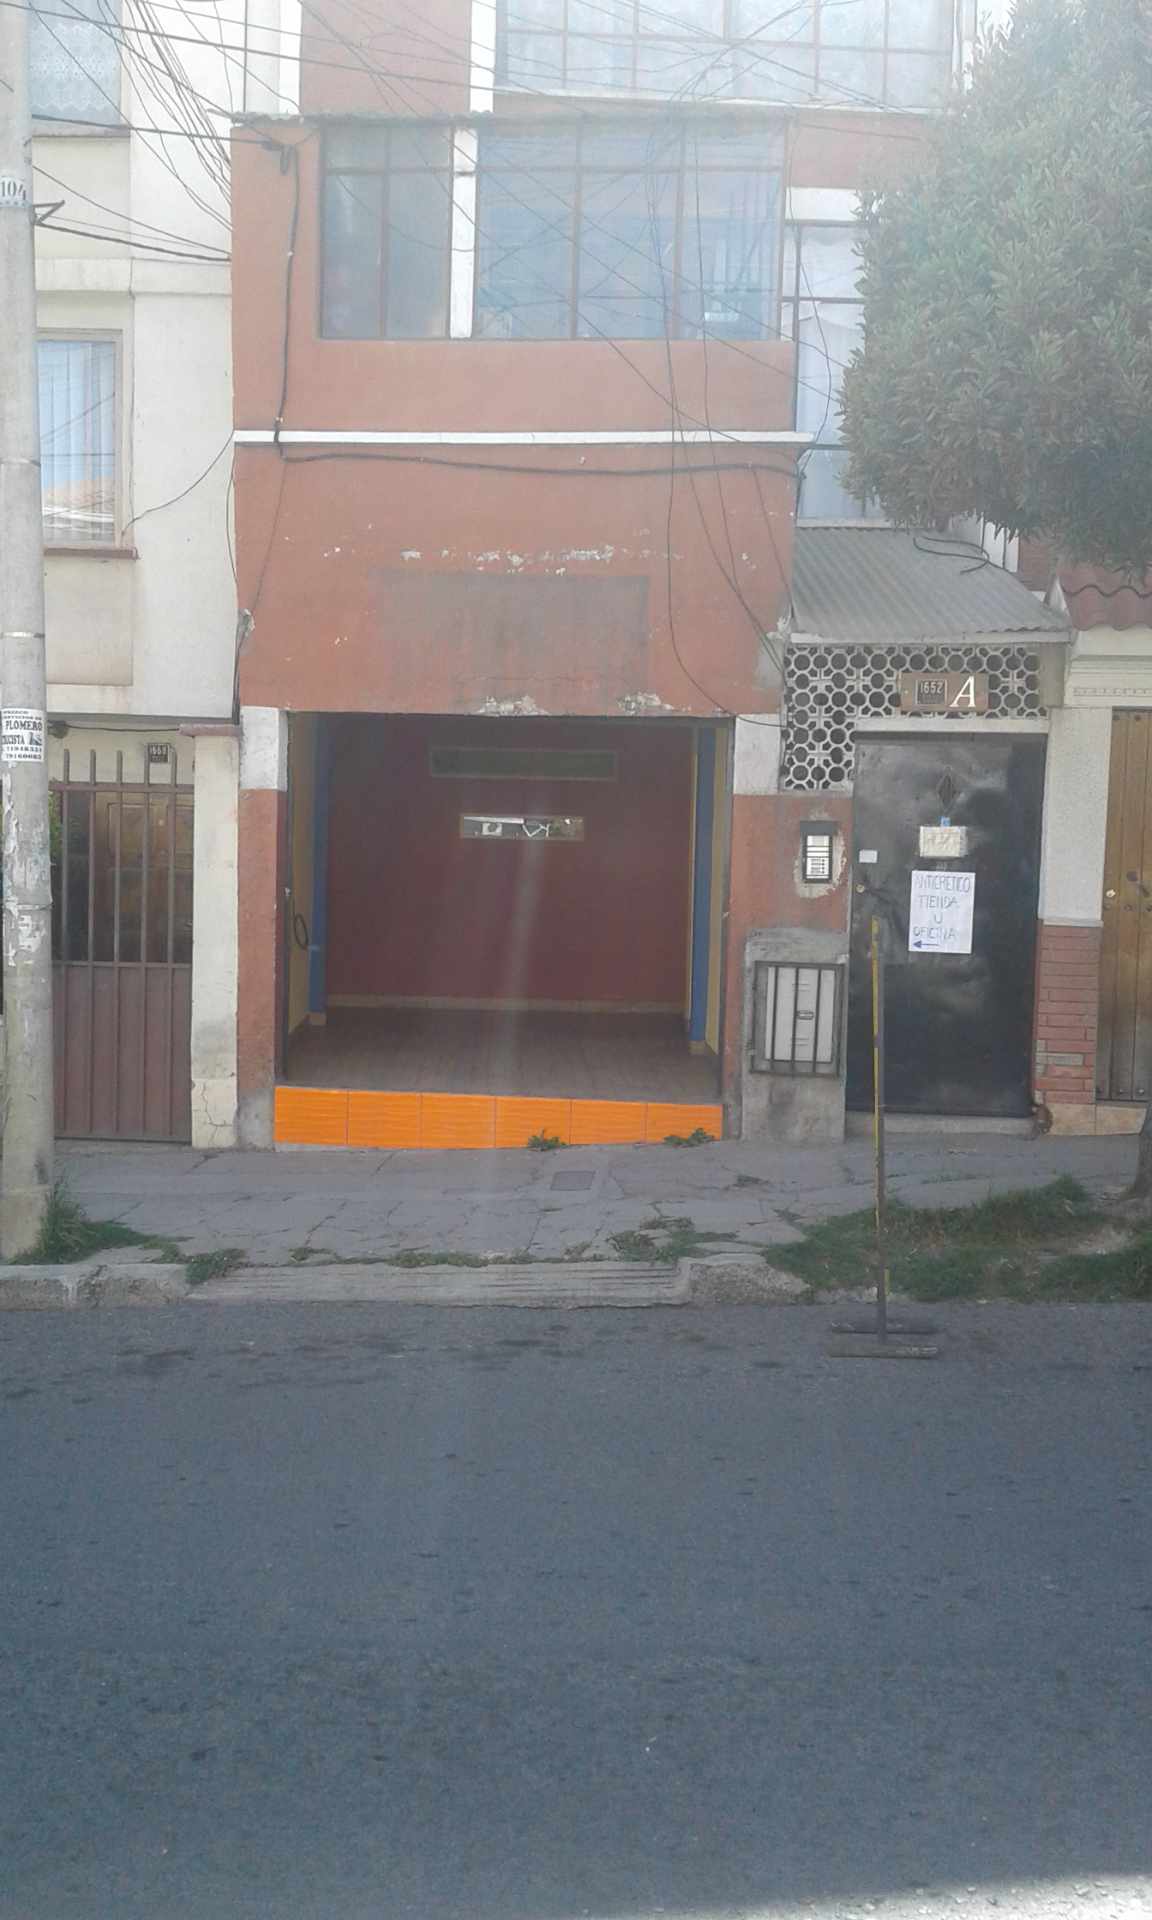 Oficina Calle Cuba No 1652A entre Carrasco y Pasoskanki zona de Miraflores La Paz - Bolivia (OFERTABLE y entrega inmediata) Foto 3